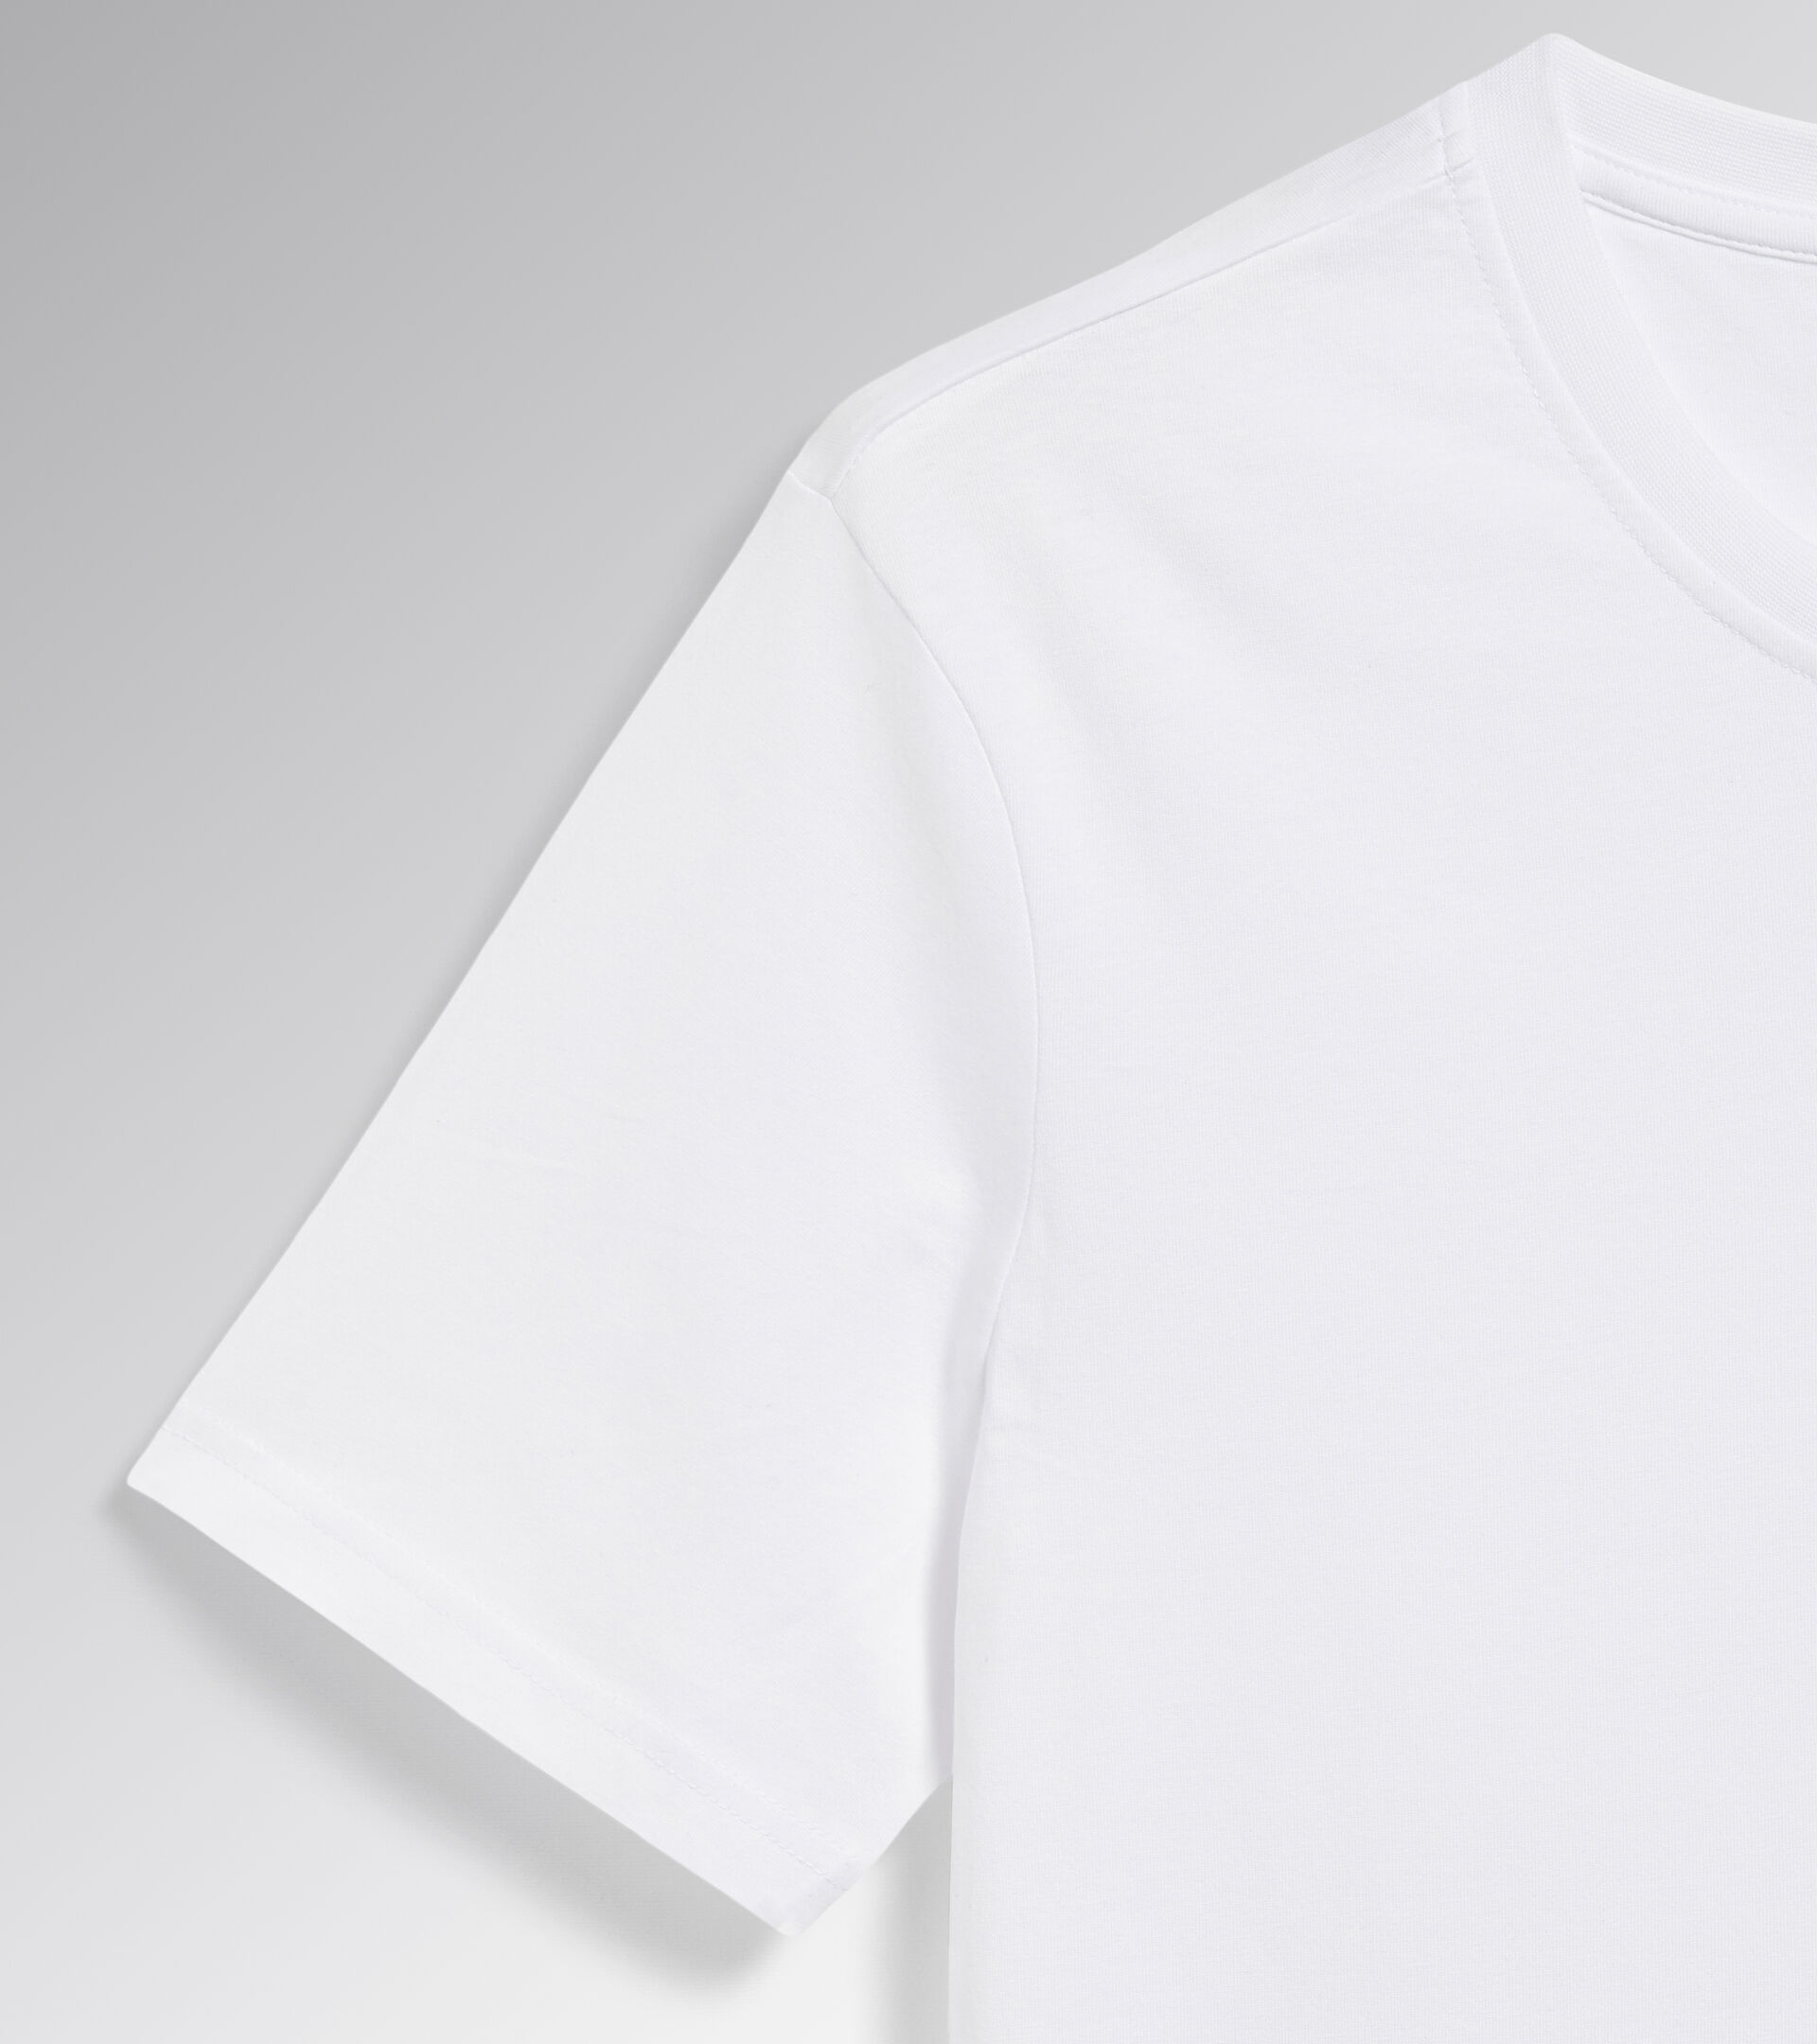 Short-sleeved work T-shirt T-SHIRT MC ATONY ORGANIC OPTICAL WHITE - Utility